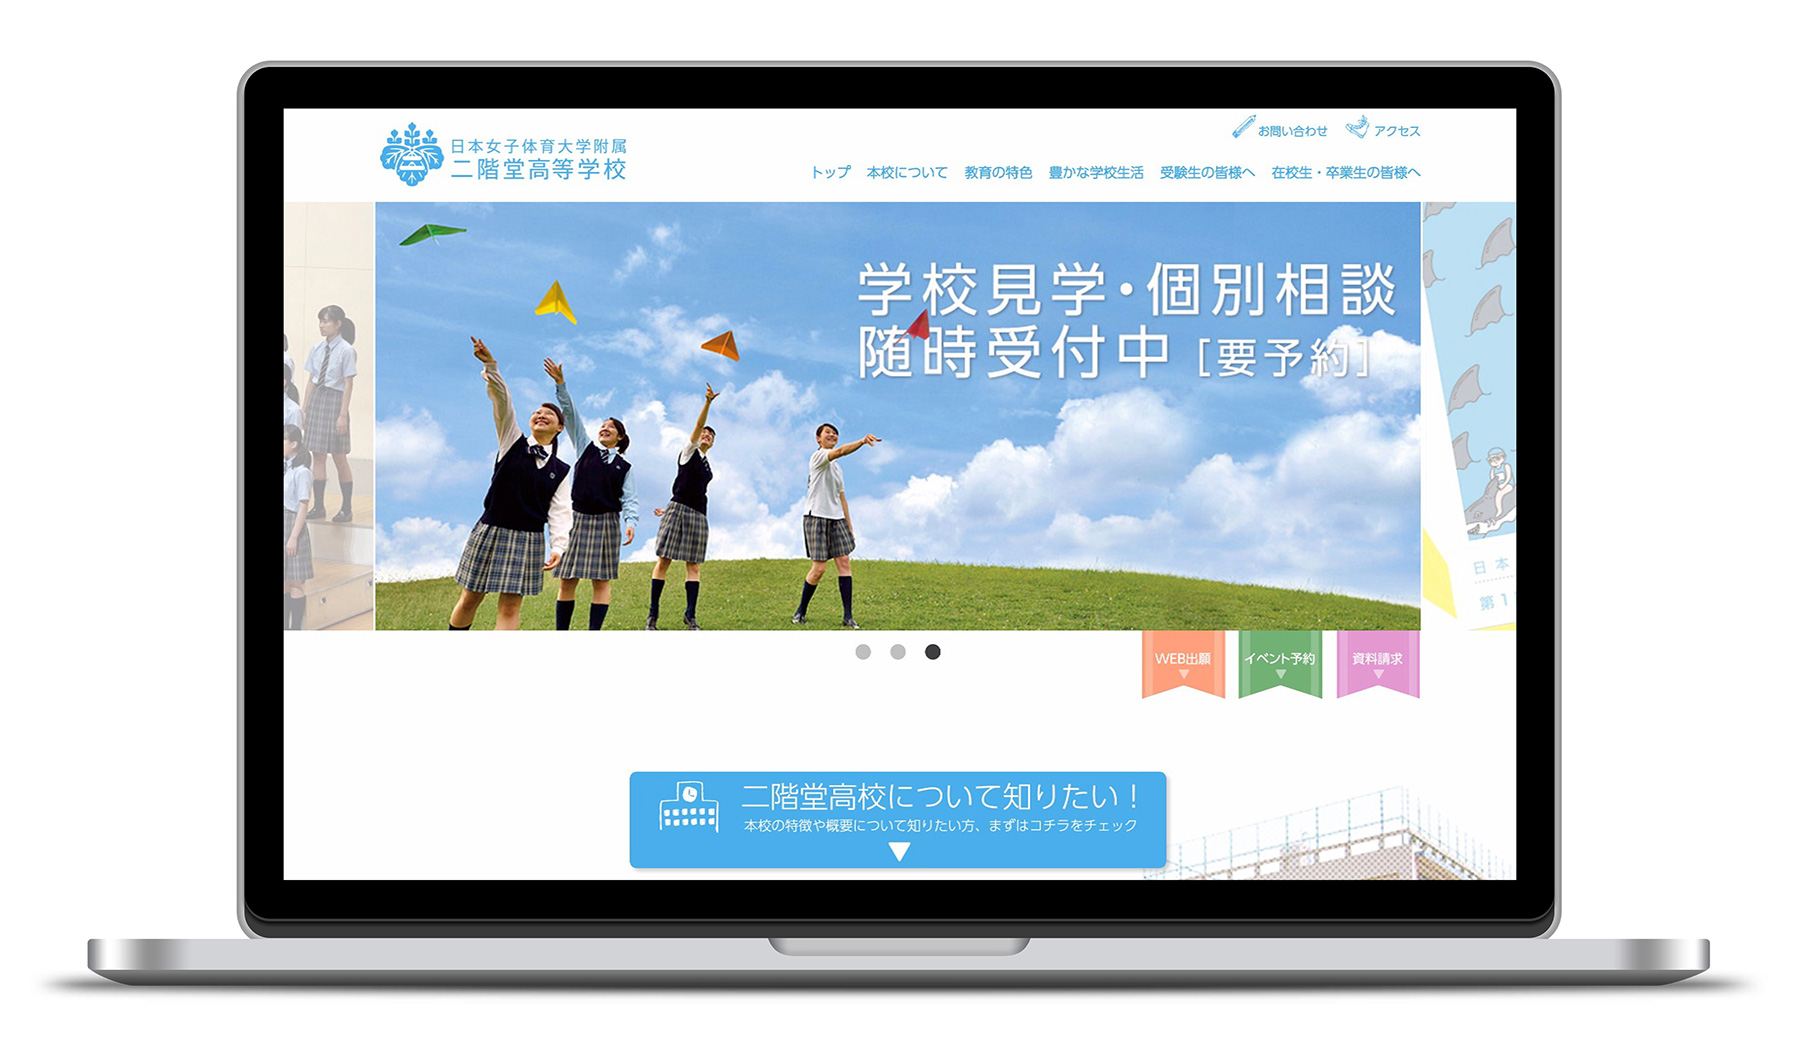 Nikaido High School 無限に広がる青空のブルーを基調にした、二階堂高校公式ウェブサイト